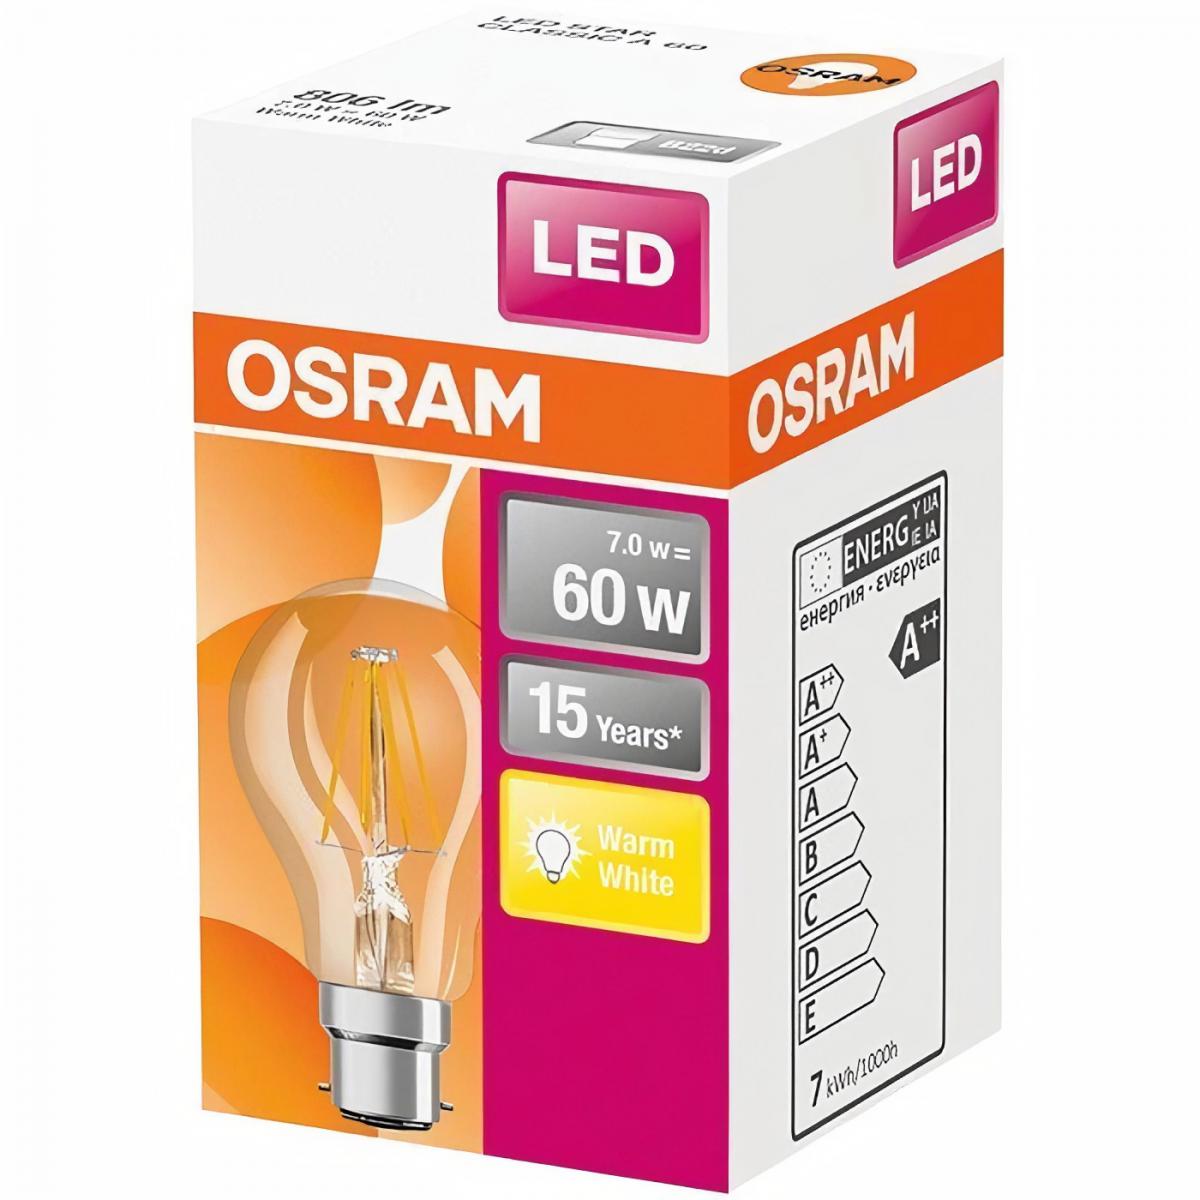 Osram - OSRAM Ampoule LED Standard clair filament 7W=60 B22 chaud - Ampoules LED